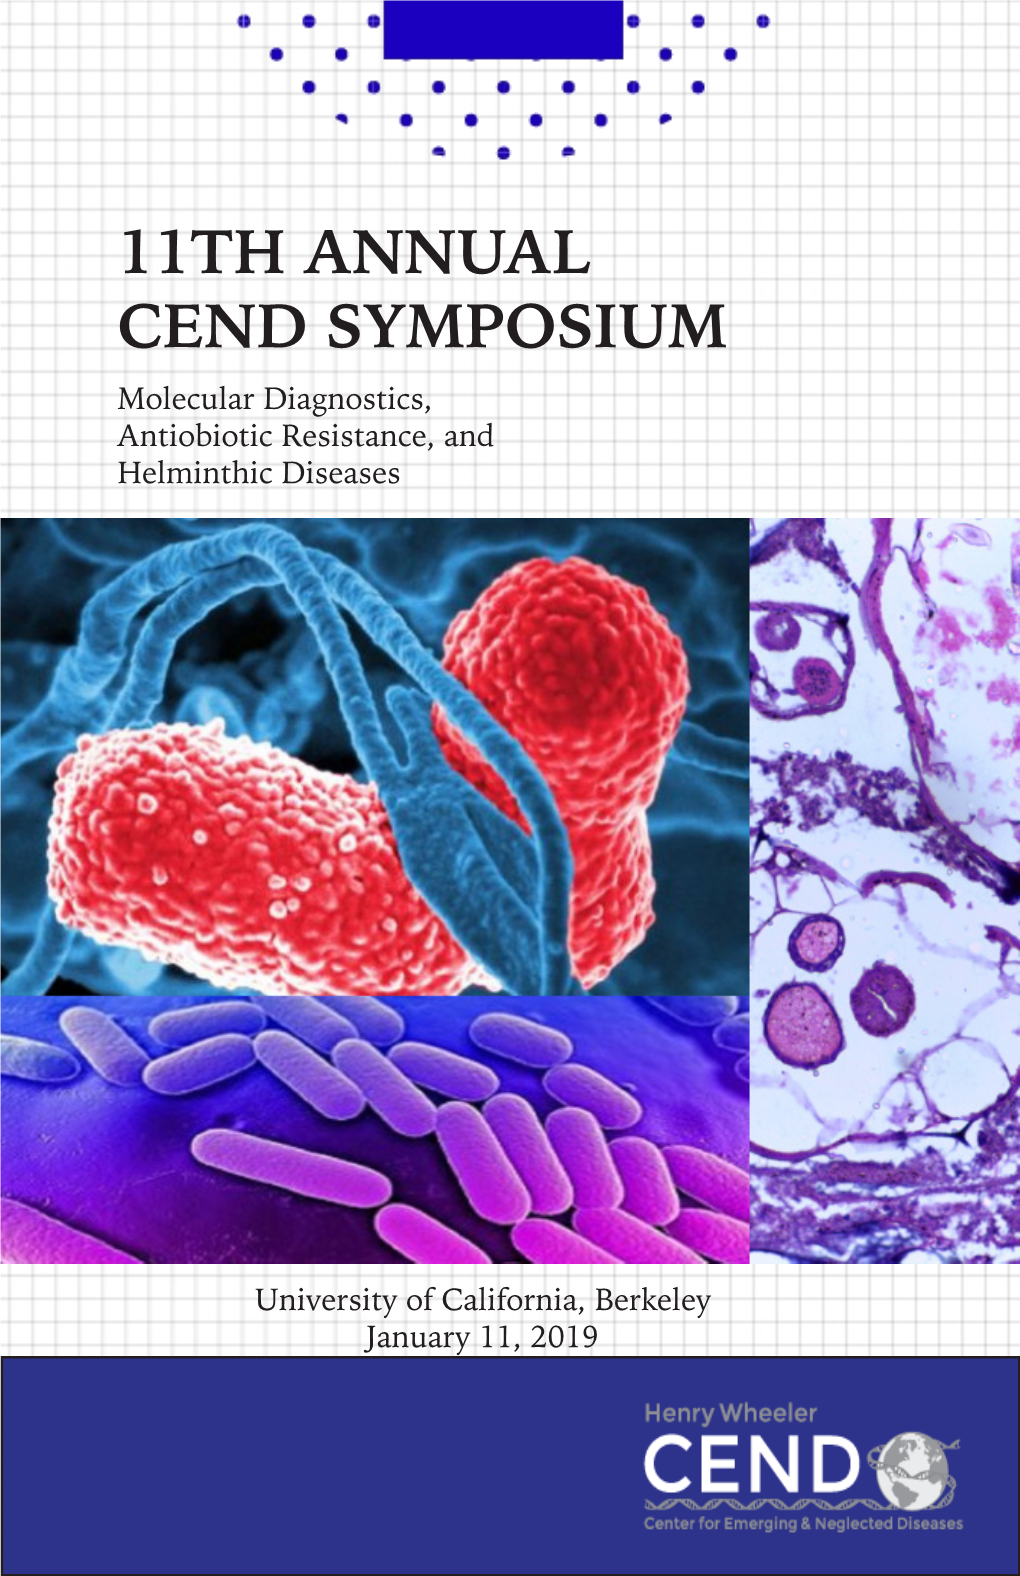 11TH ANNUAL CEND SYMPOSIUM Molecular Diagnostics, Antiobiotic Resistance, and Helminthic Diseases